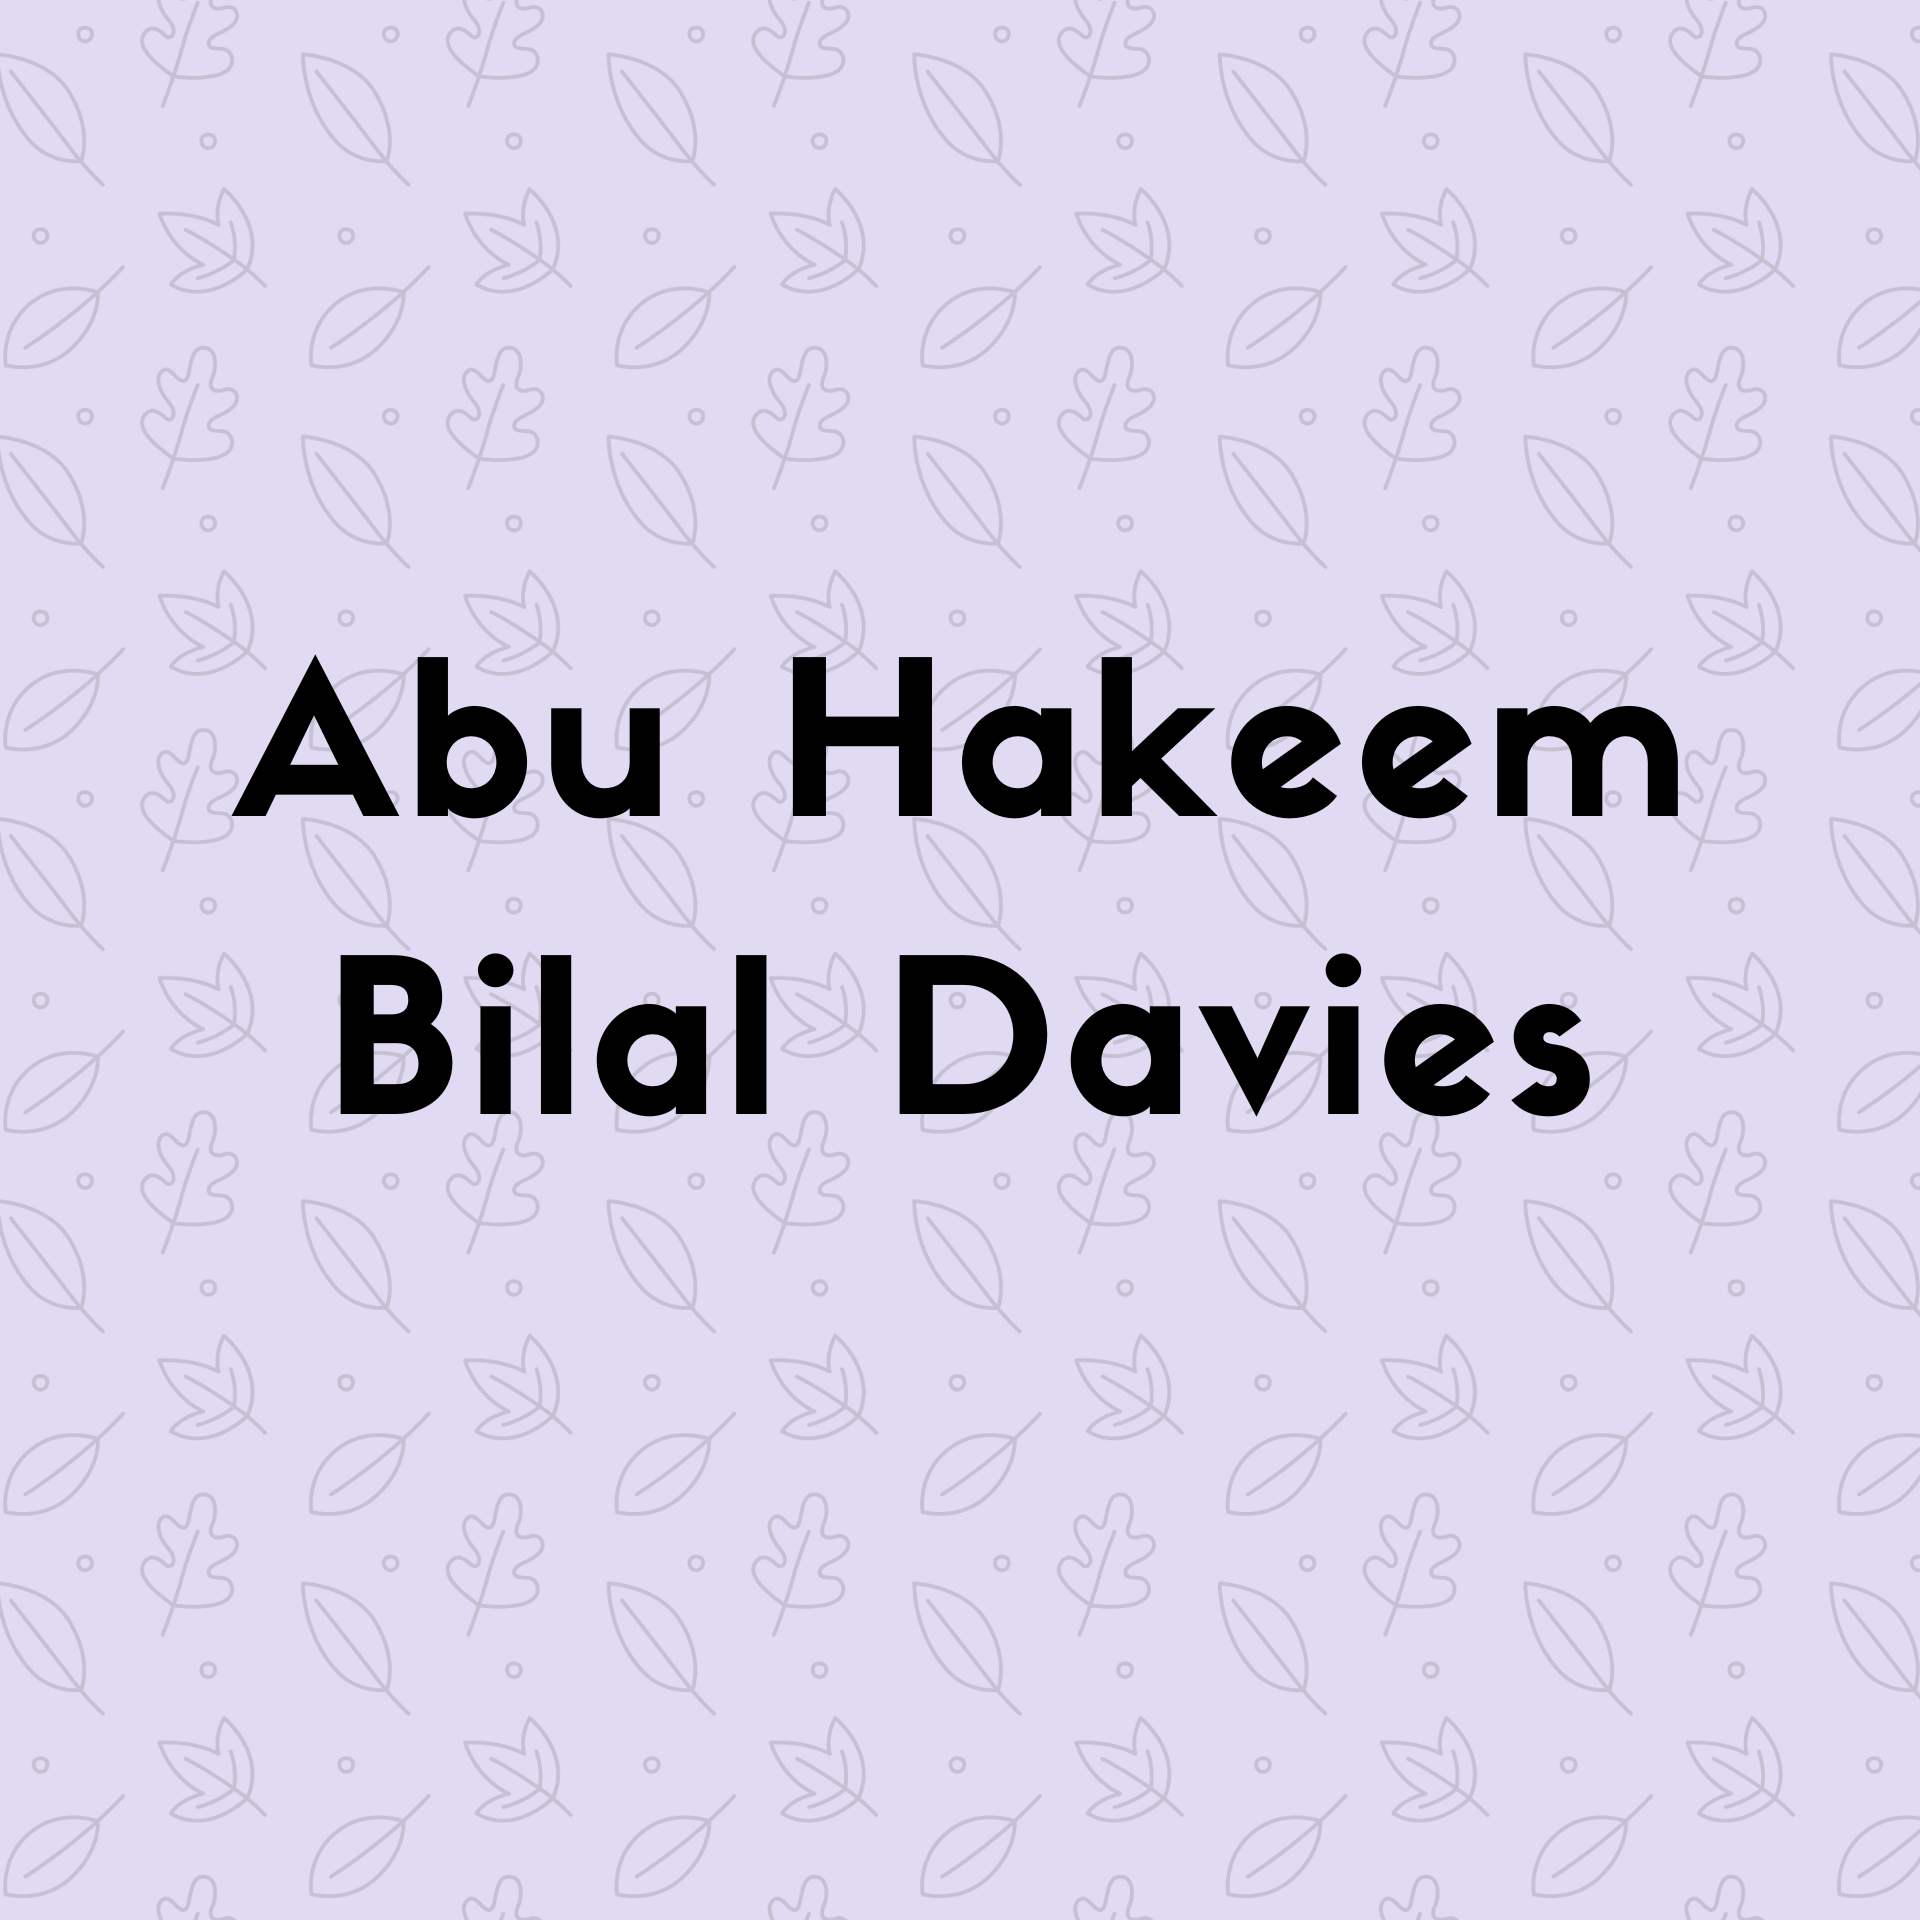  Abu Hakeem Bilal Davies